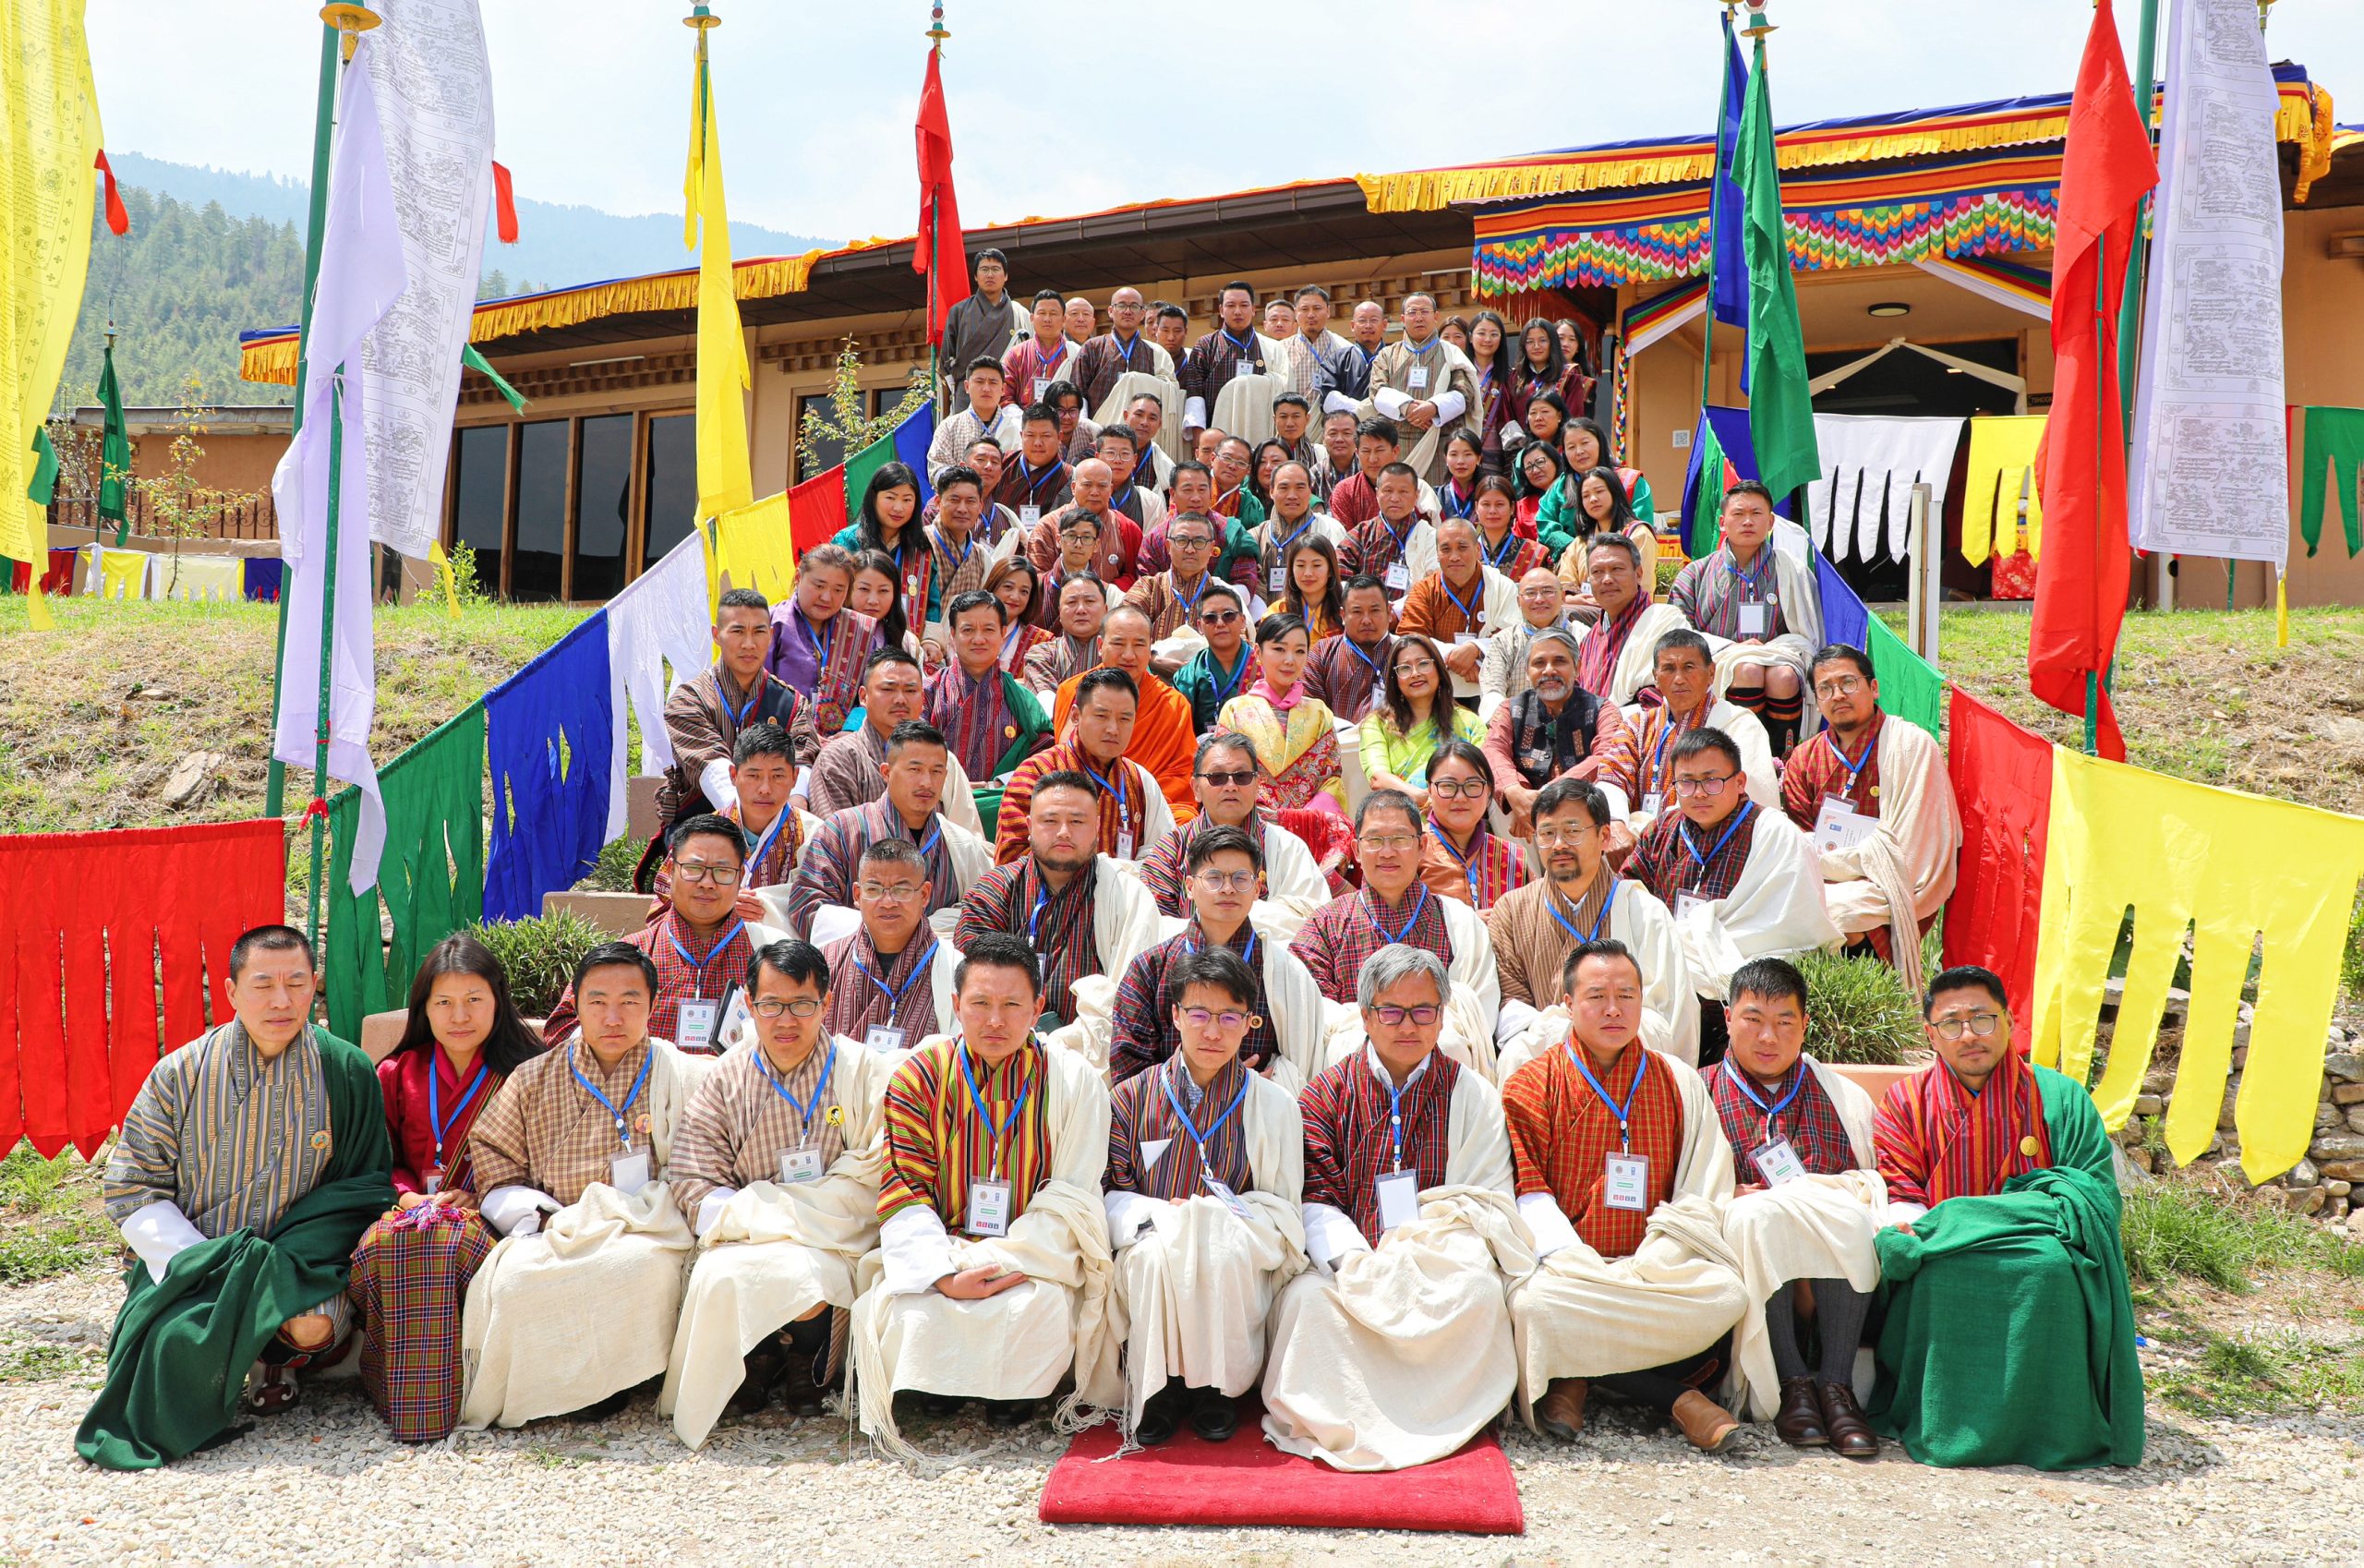 Bar Council of Bhutan encourages Pro Bono legal aid for the vulnerable